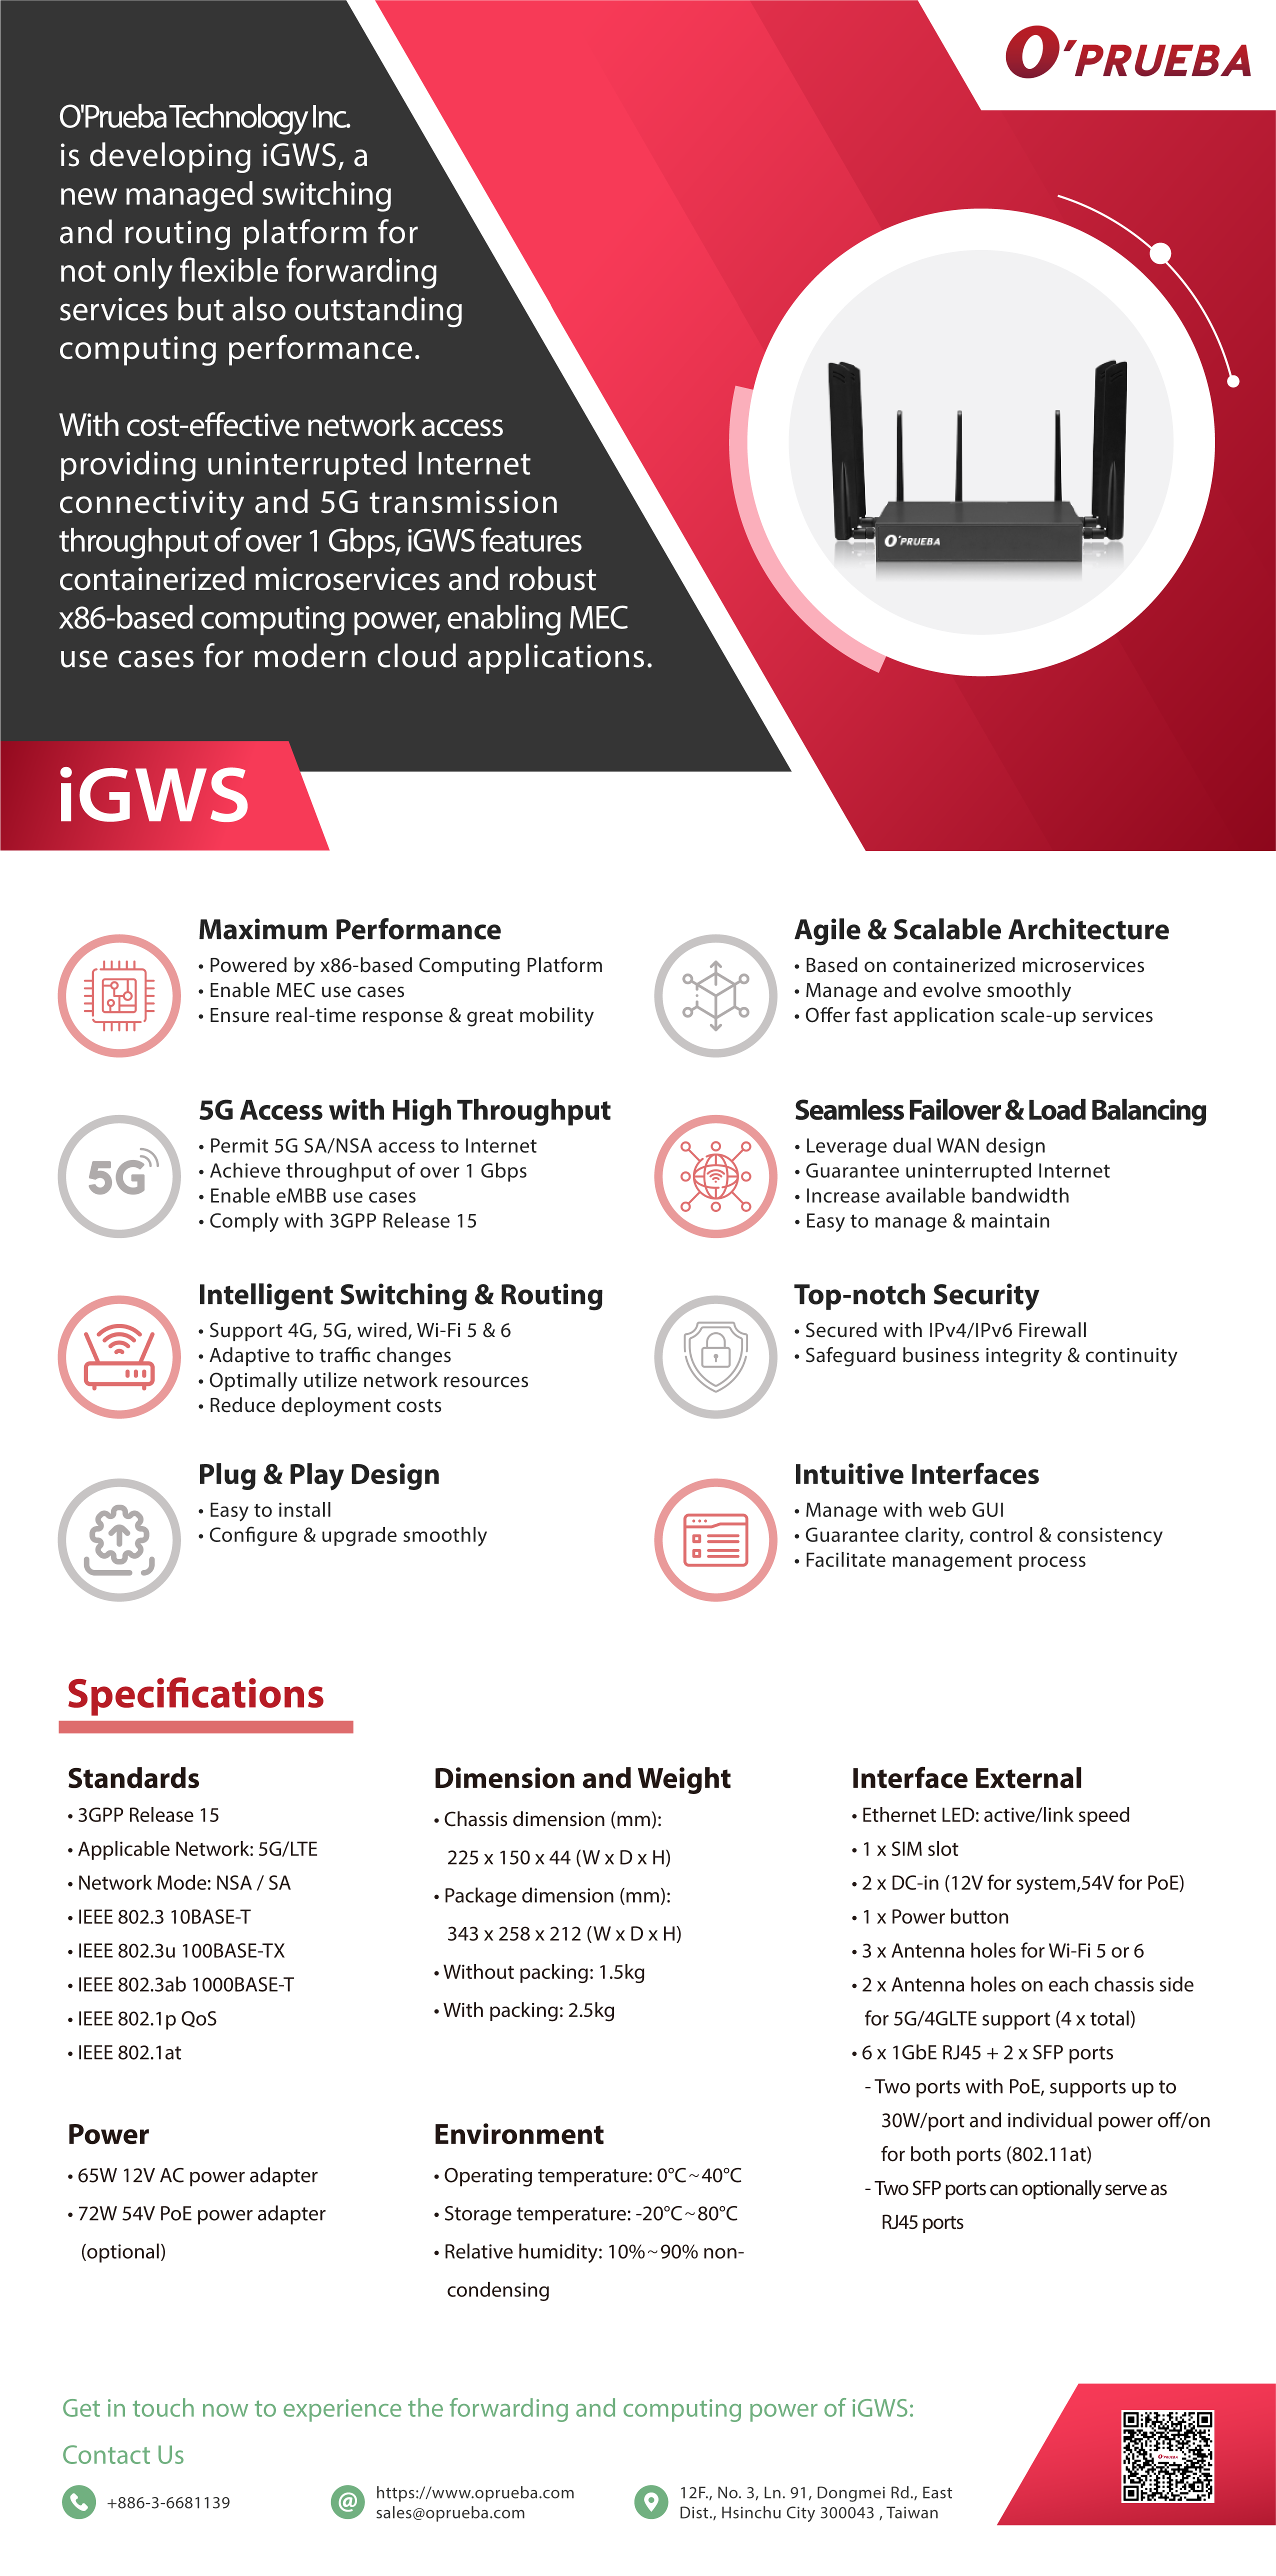 iGWS showcases O’Prueba’s 5G forwarding and computing sophistication